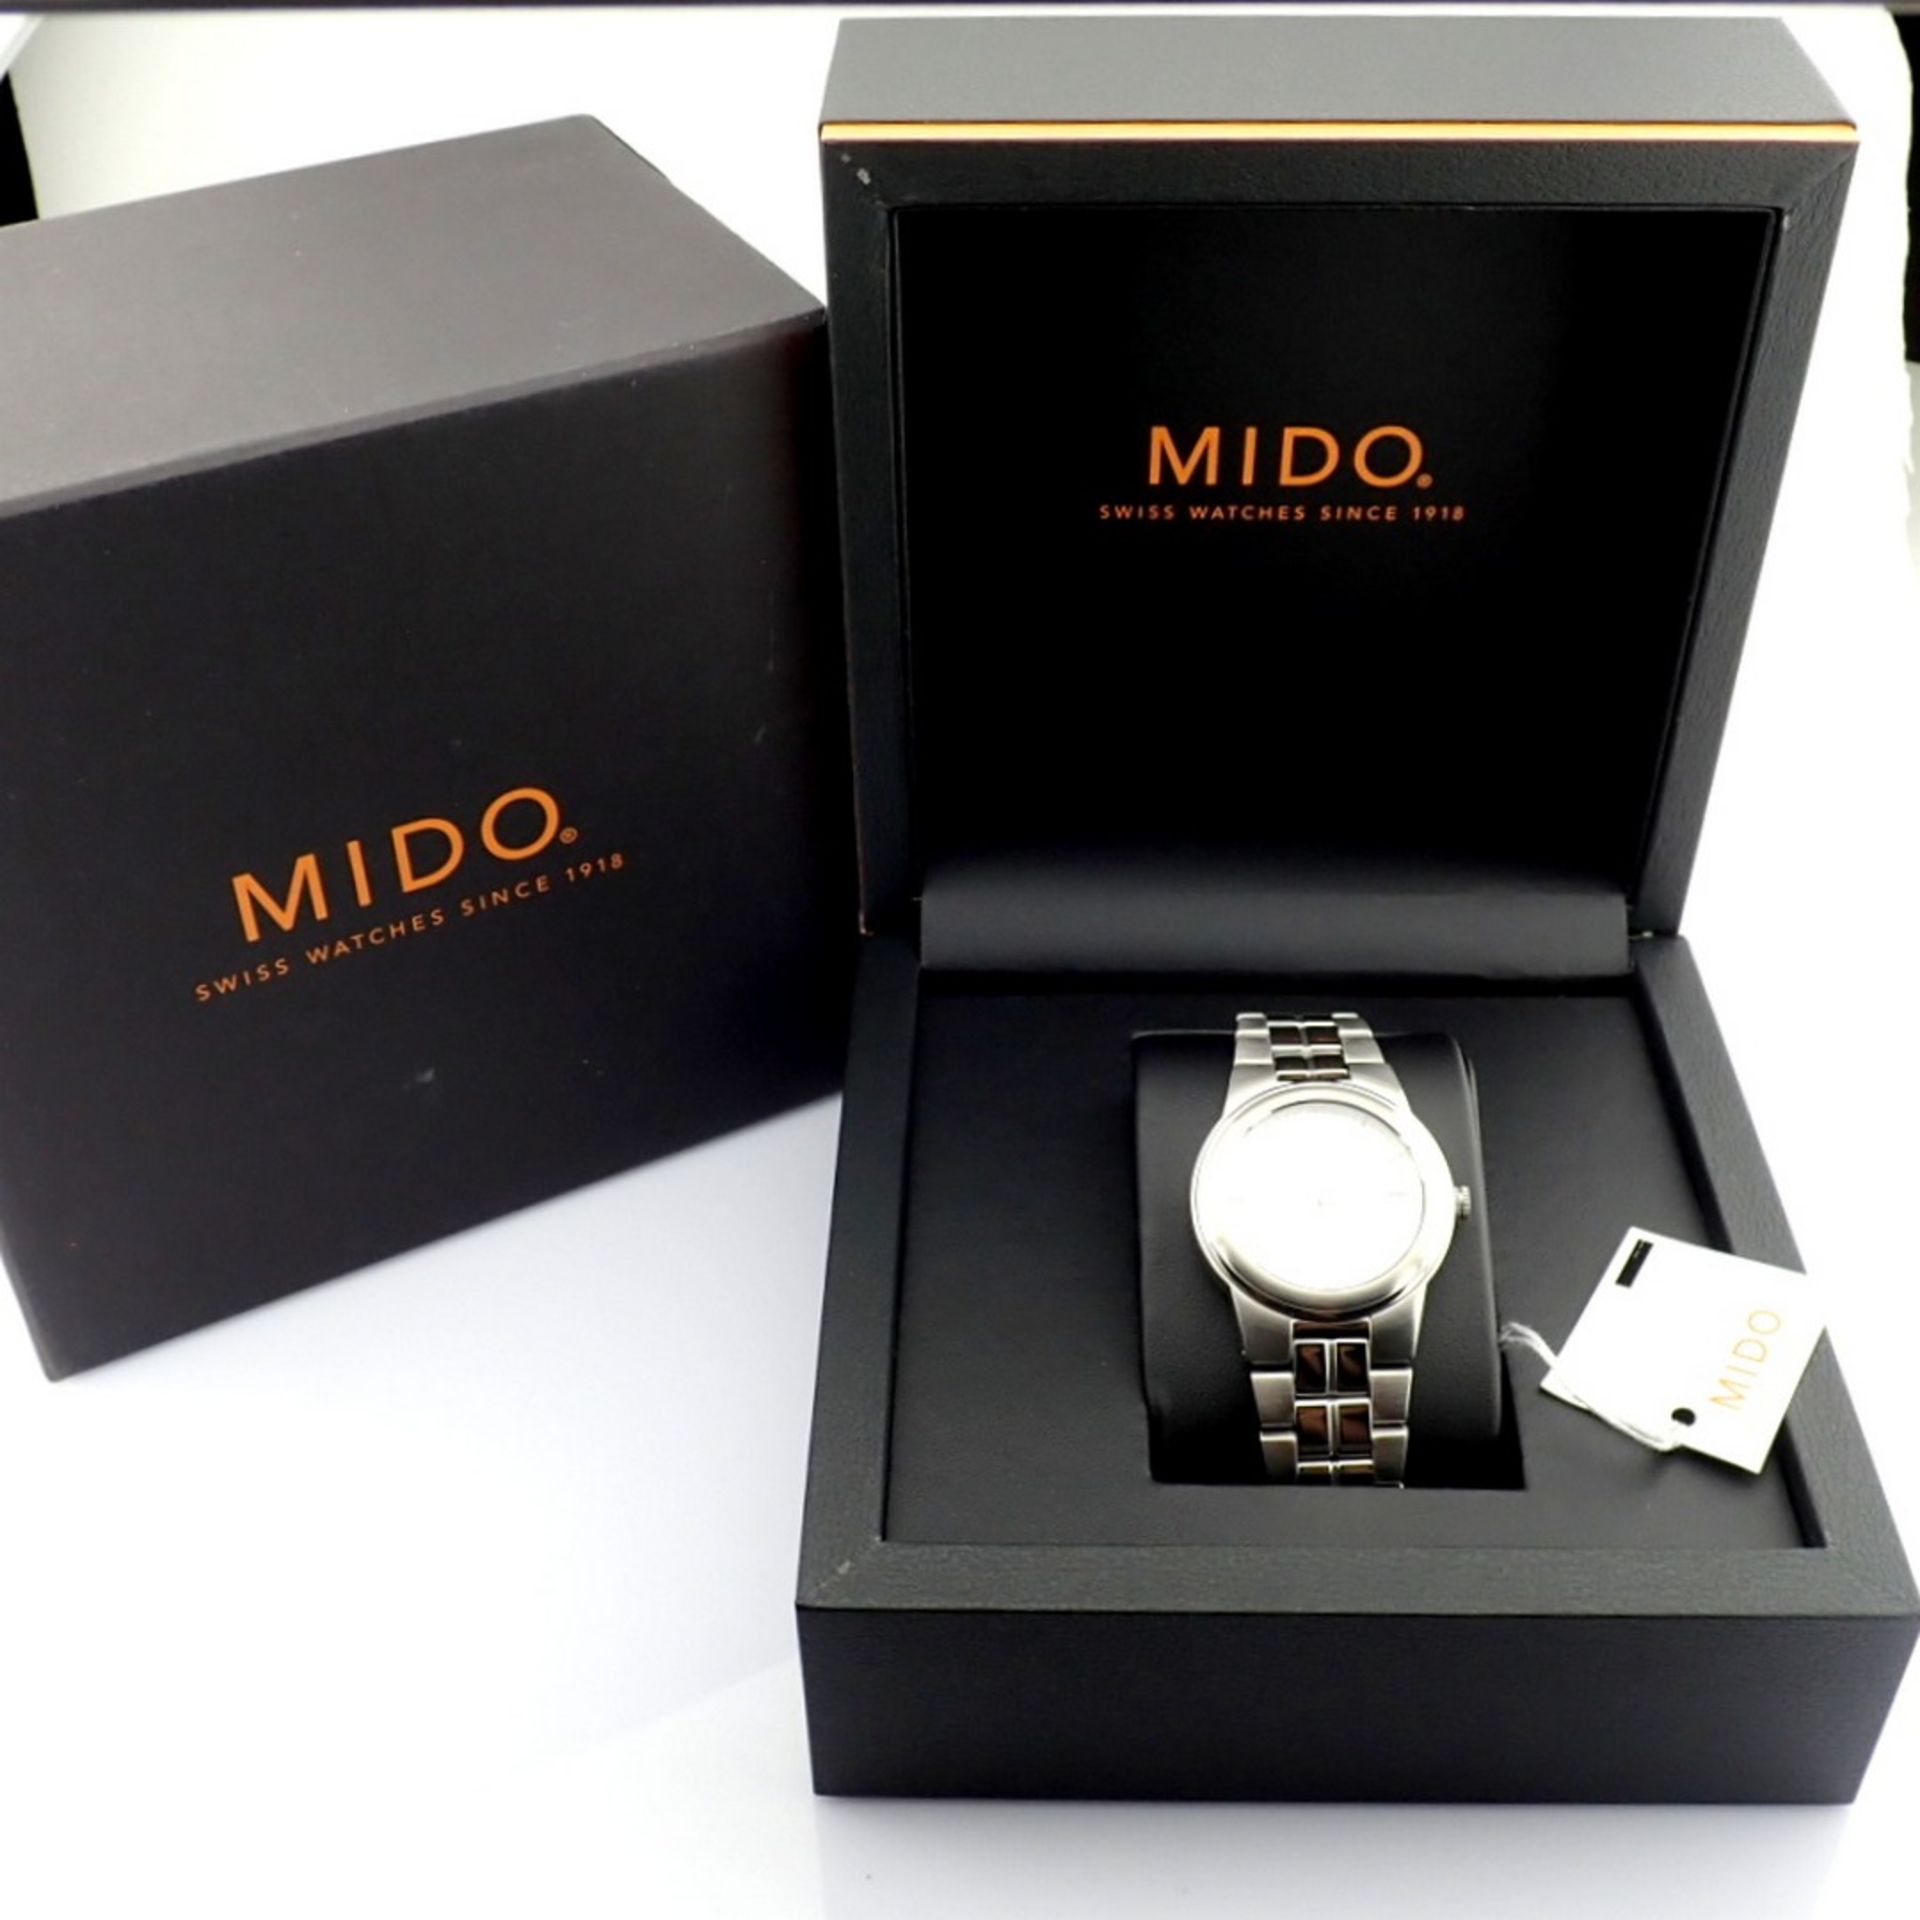 Mido / Ocean Star Aquadura (Brand new) - Gentlmen's Steel Wrist Watch - Image 2 of 12